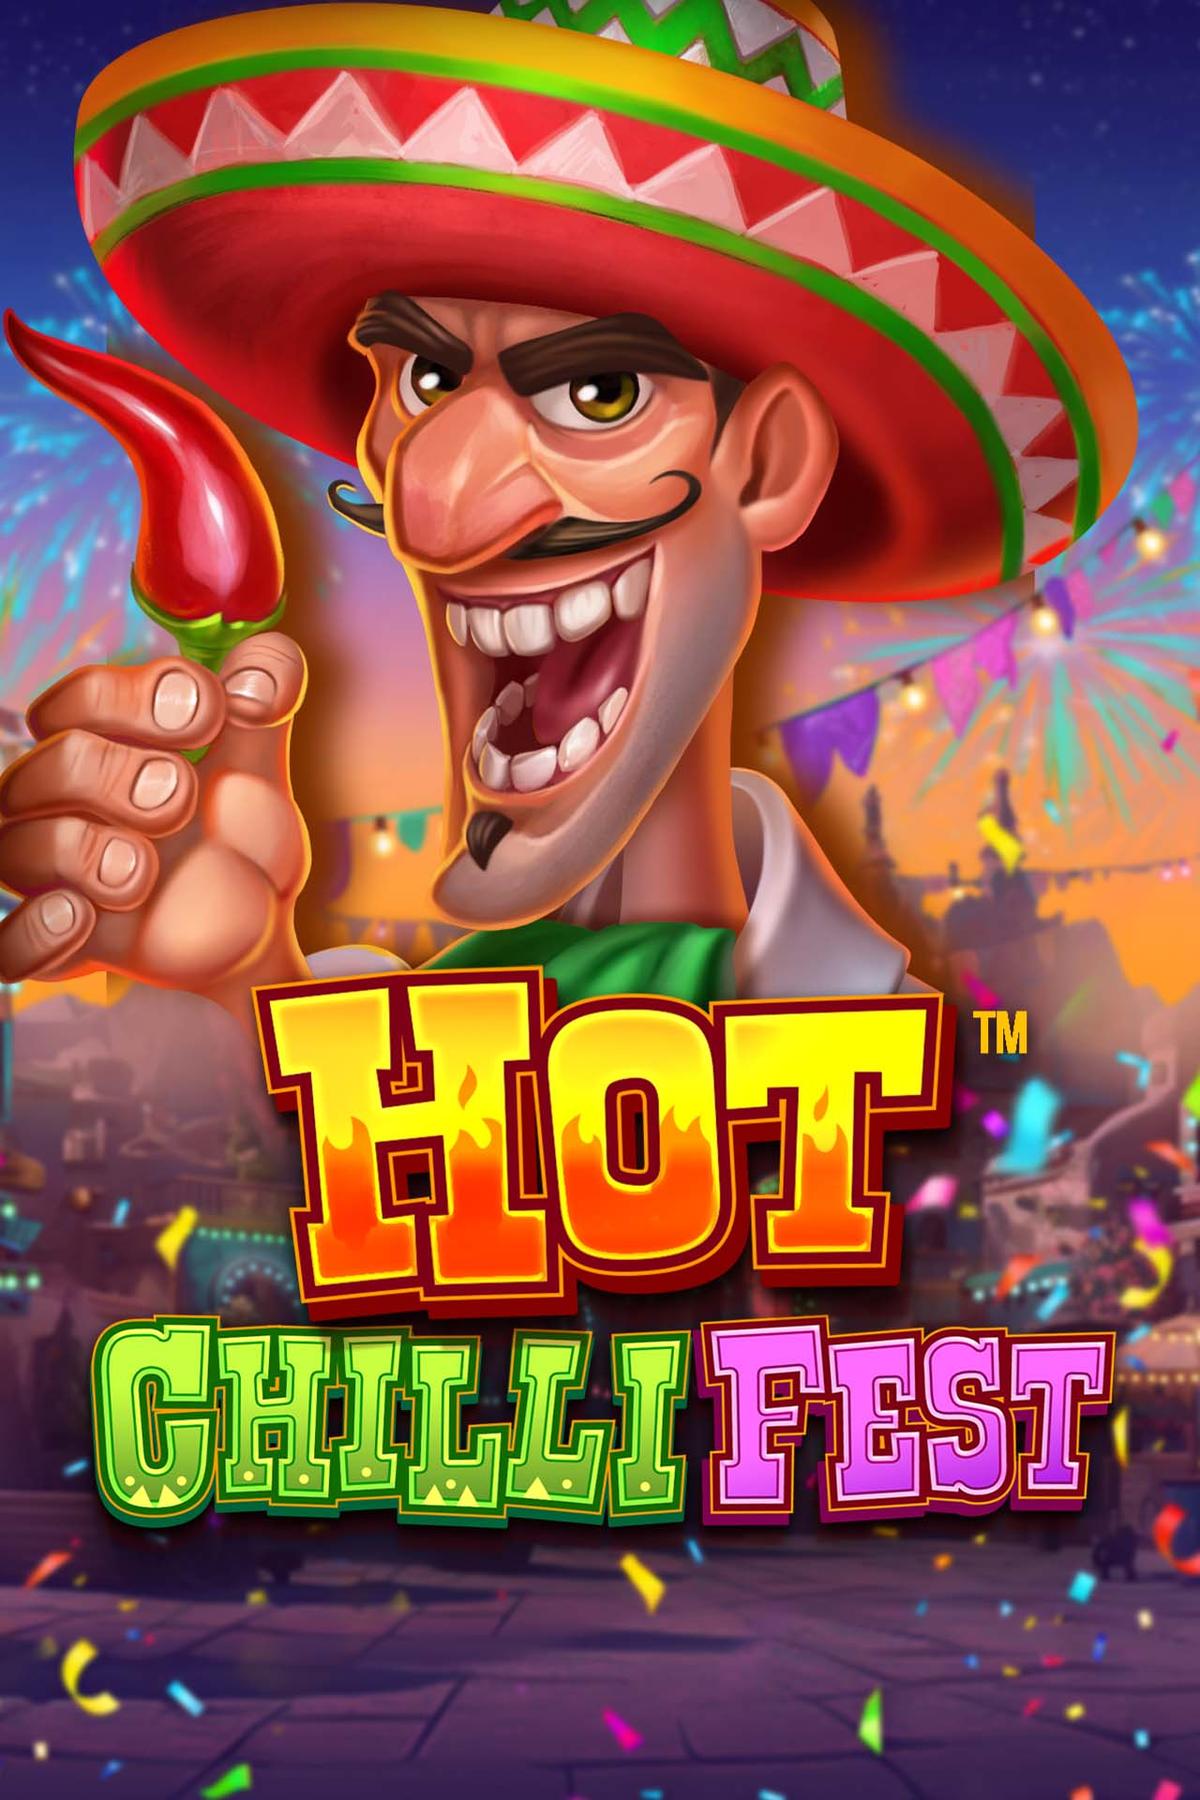 Hot Chilli Fest